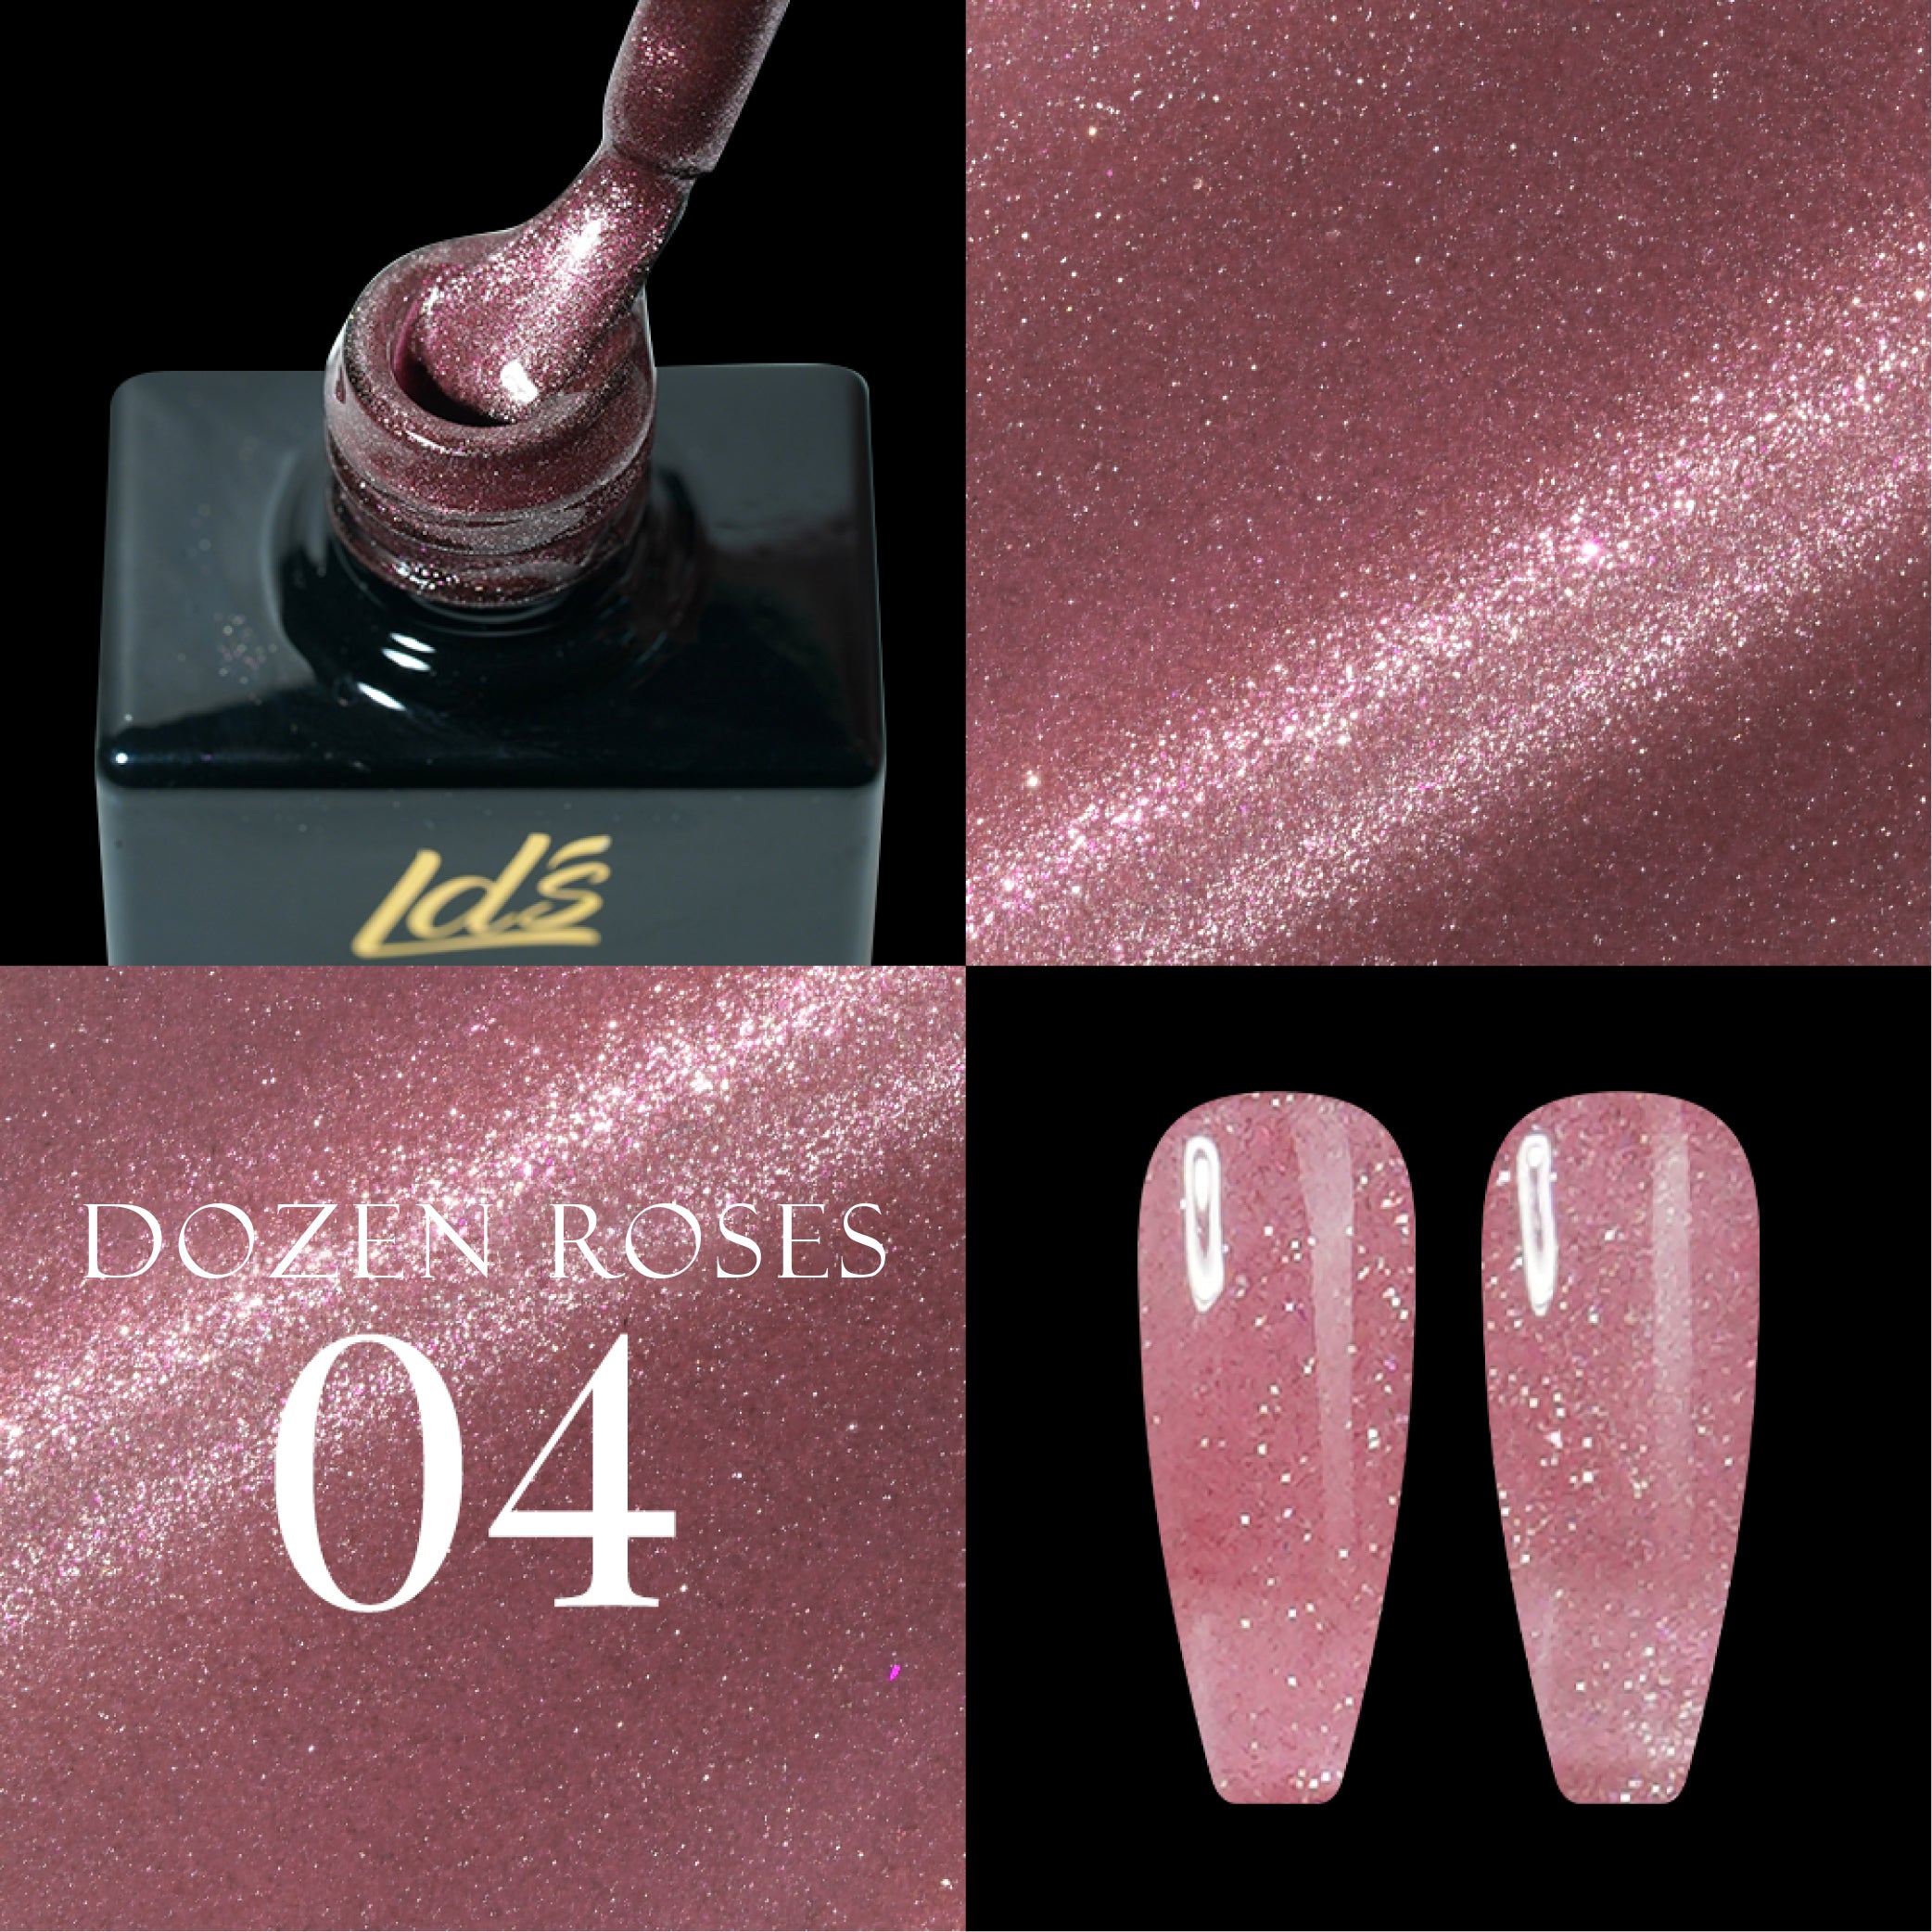 LDS DR04 - Gel Polish 0.5 oz - Dozen Rose Collection